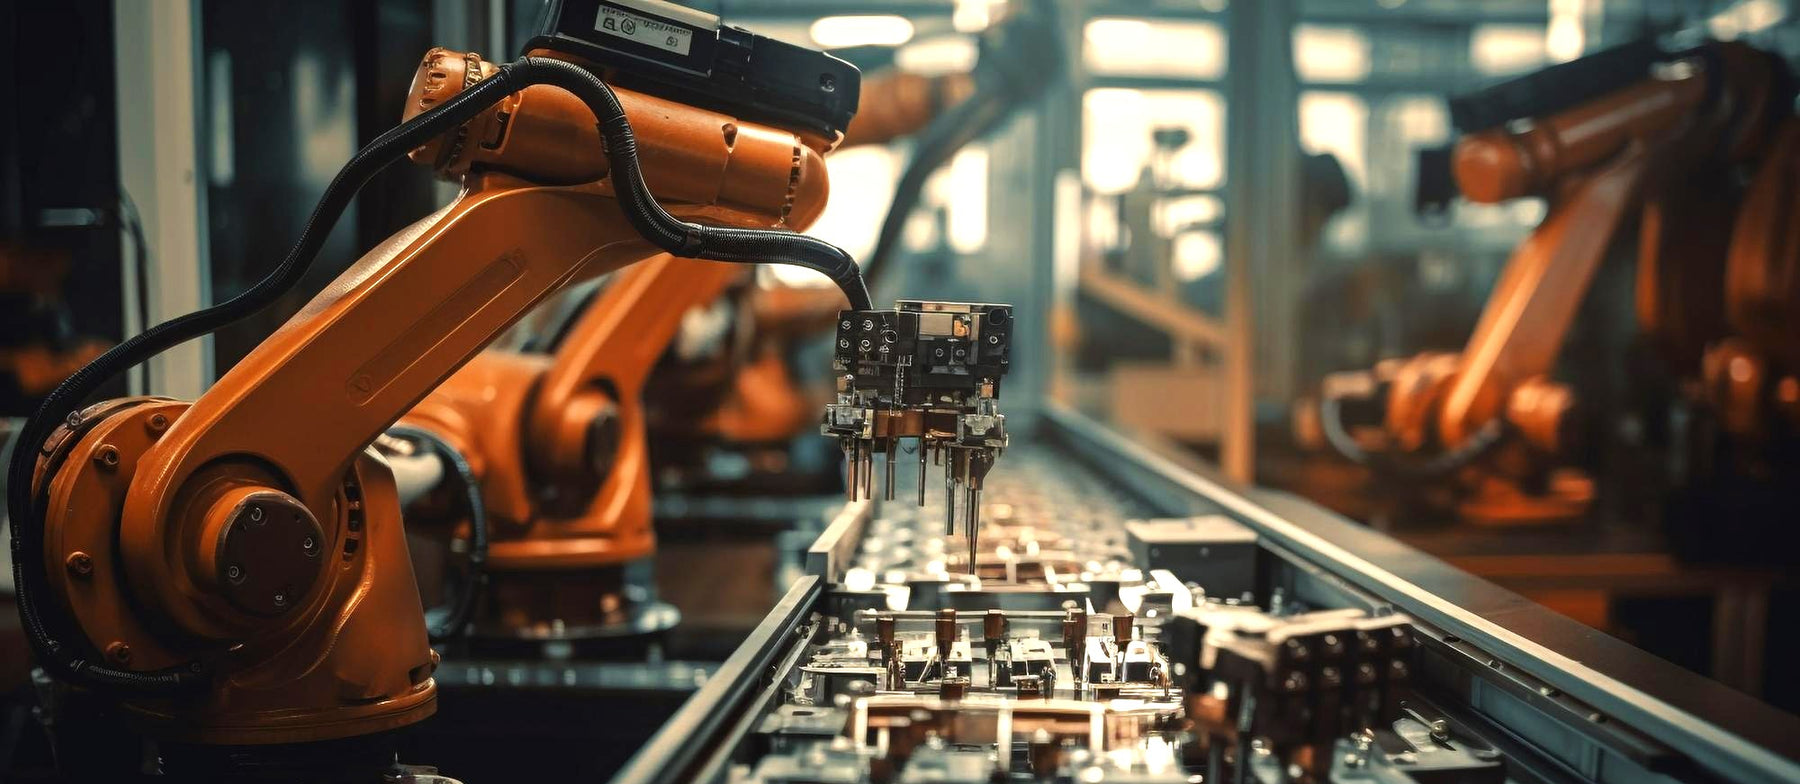 Robot Servo Motors: Working Principle, Applications & Future Prospects